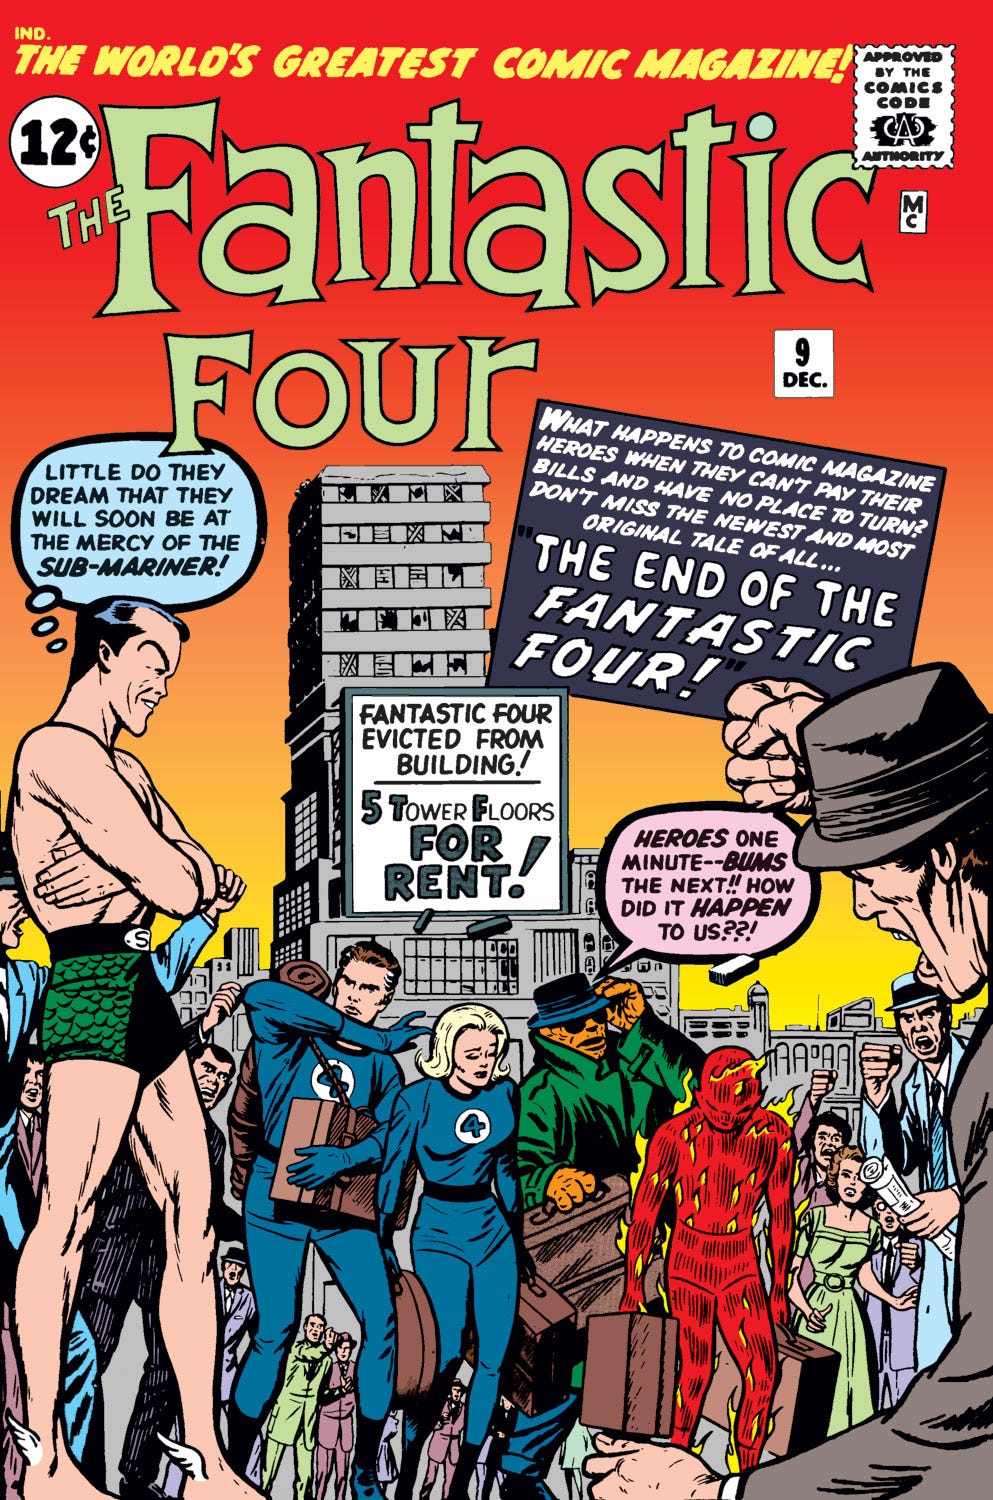 Fantastic Four (1961) #9 | Comic Issues | Marvel